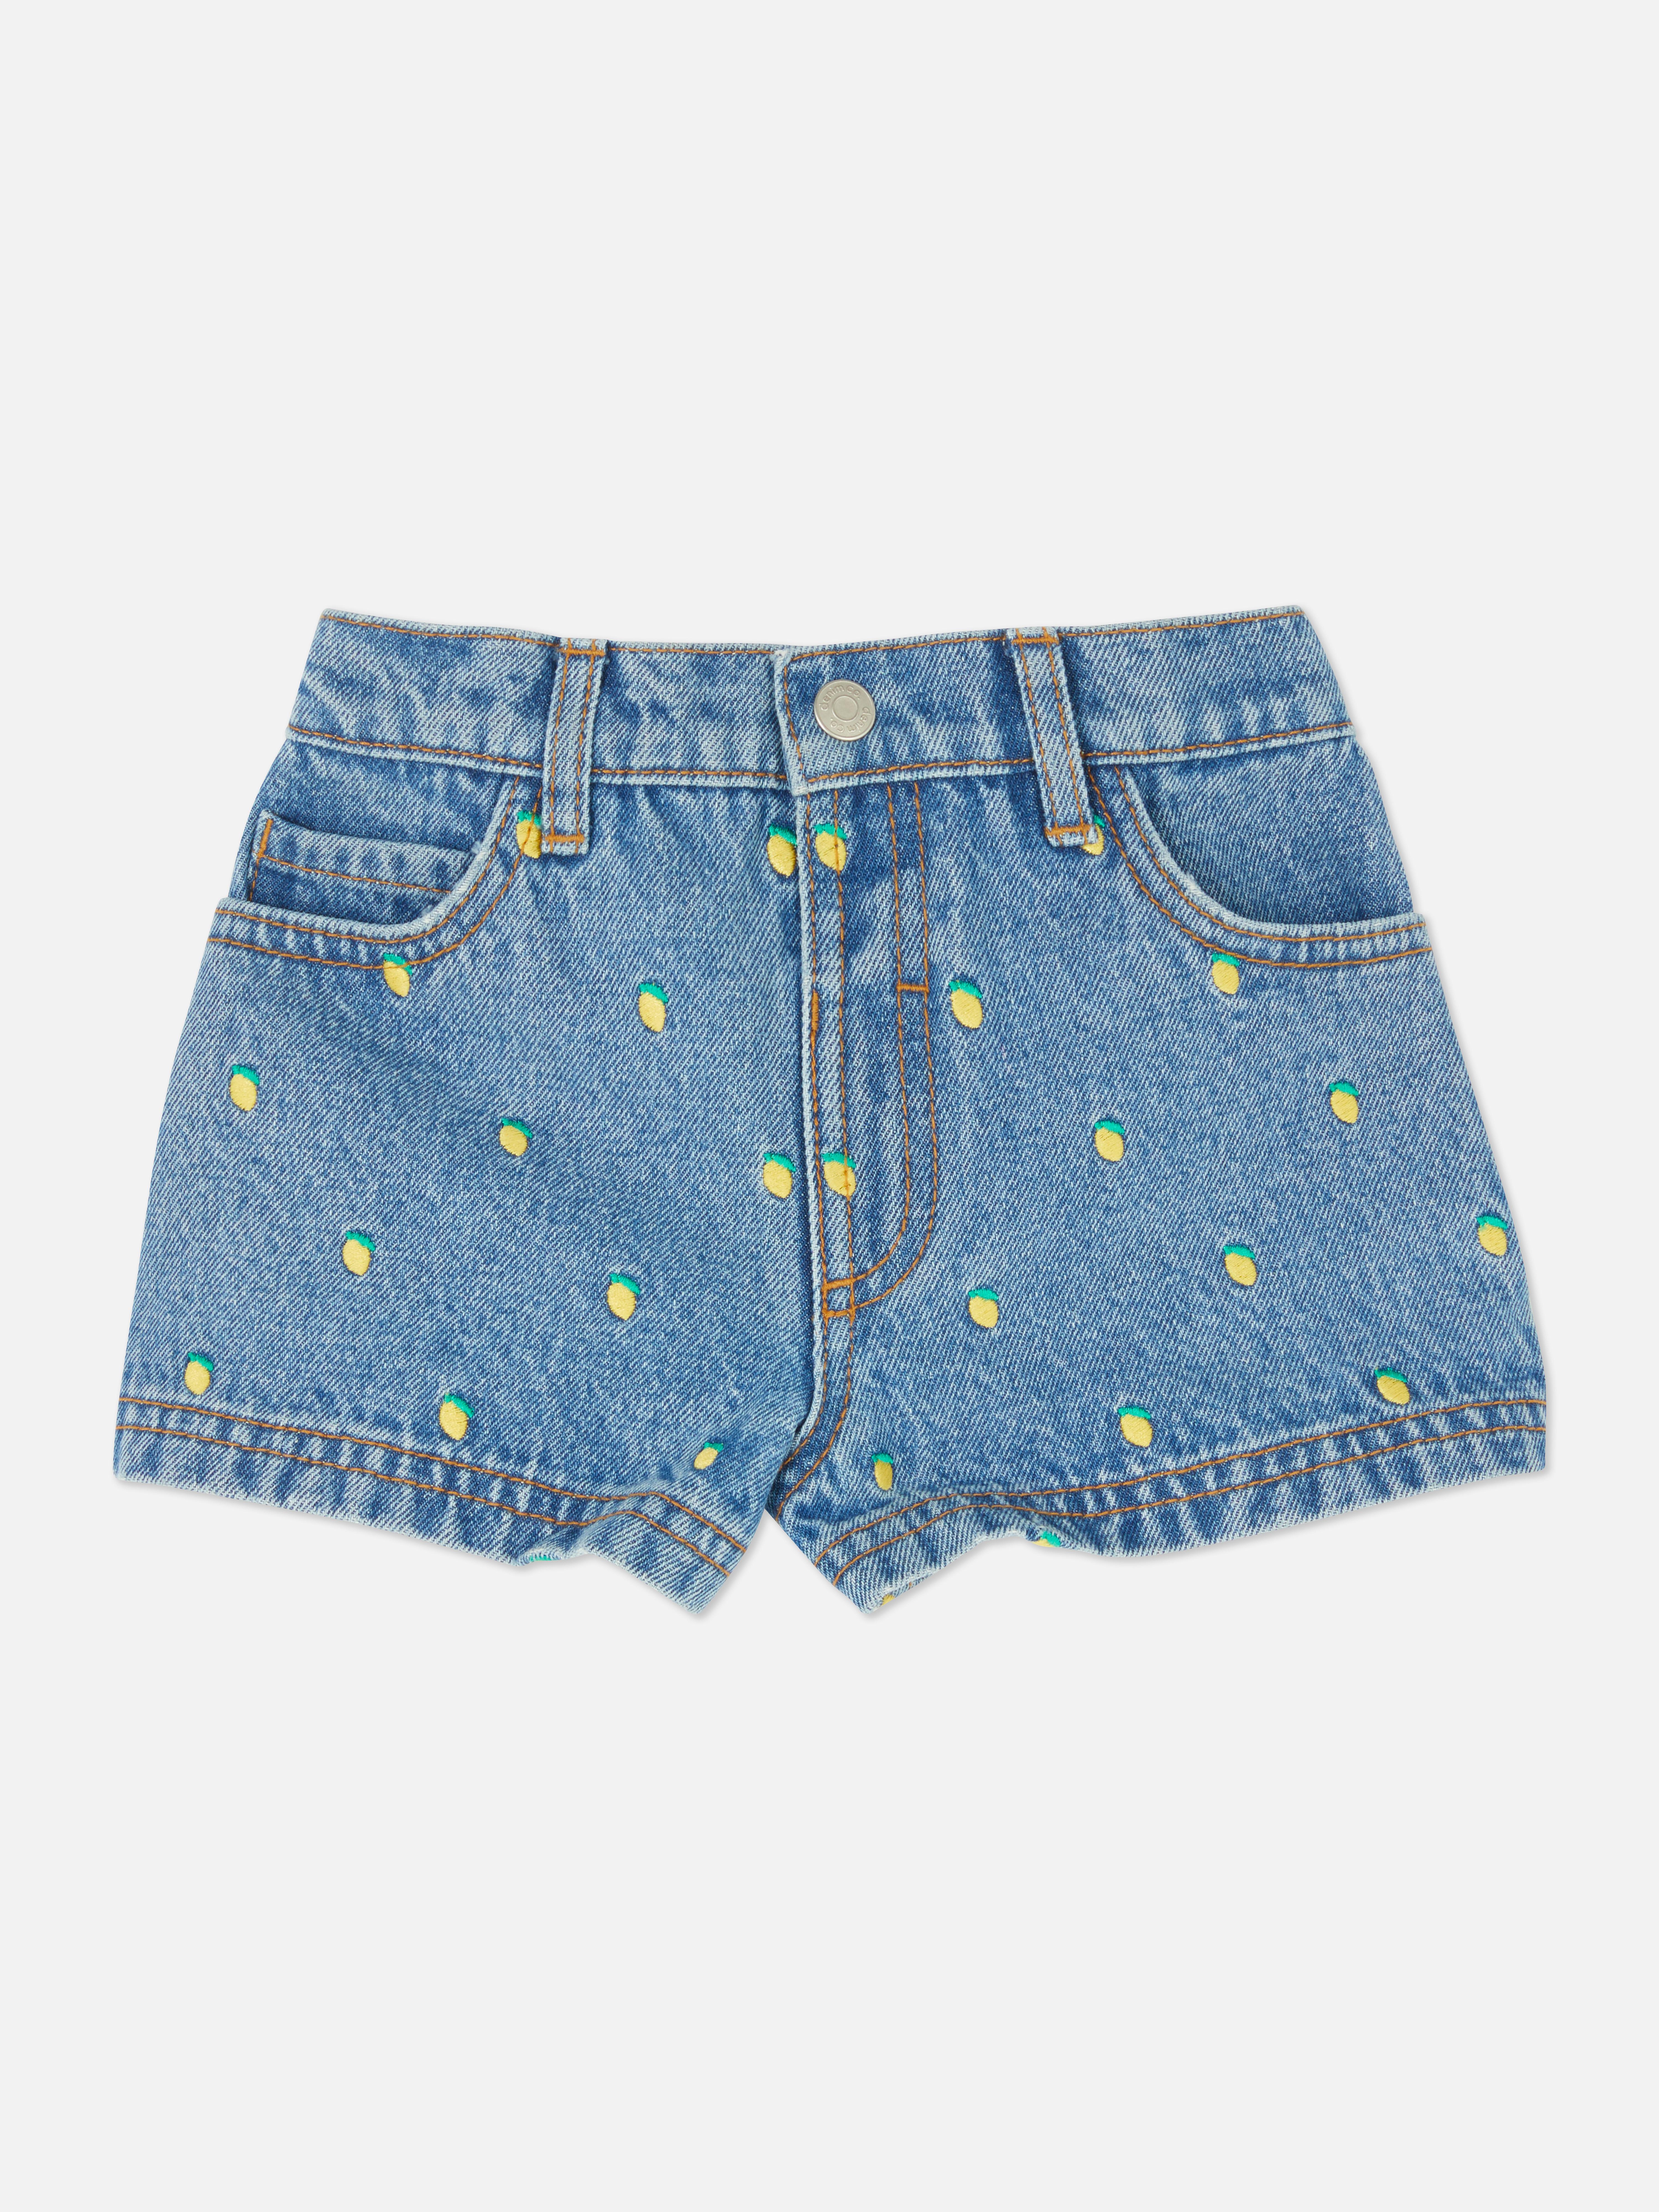 Embroidered Lemon Denim Shorts